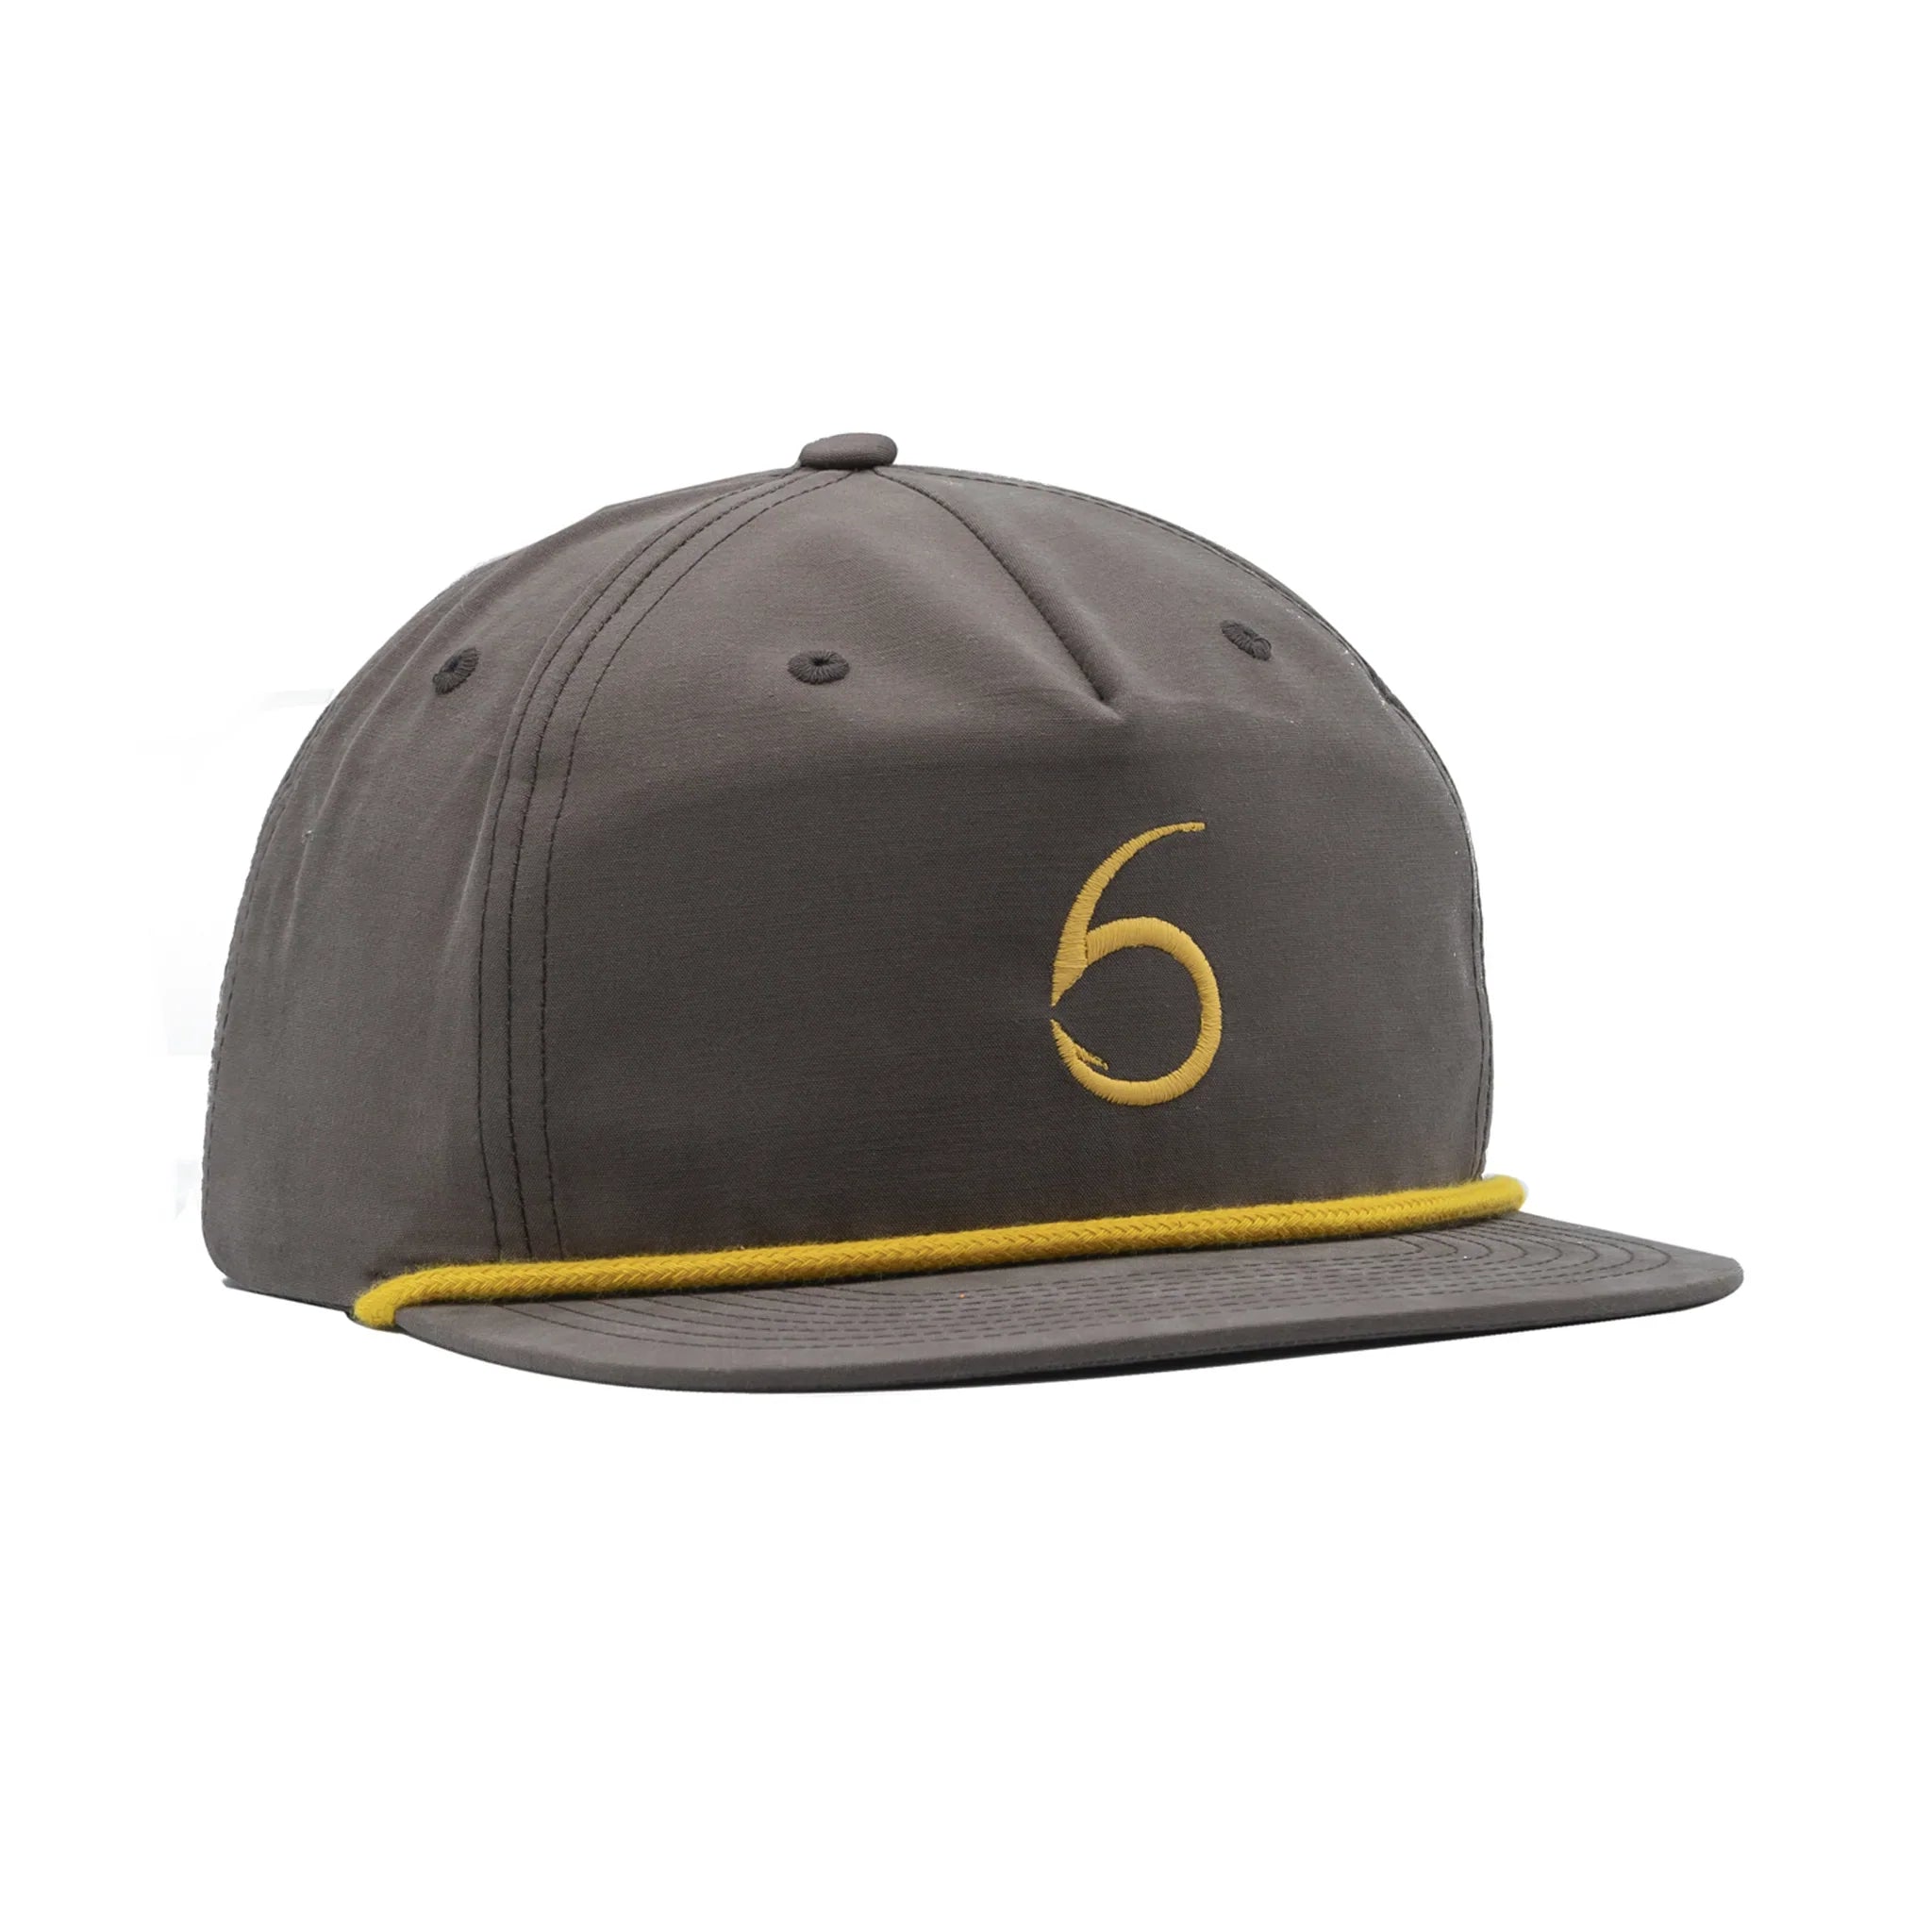 6th Sense Hunting- Premium Hats - Old Timer - Bunker Hill – 6th